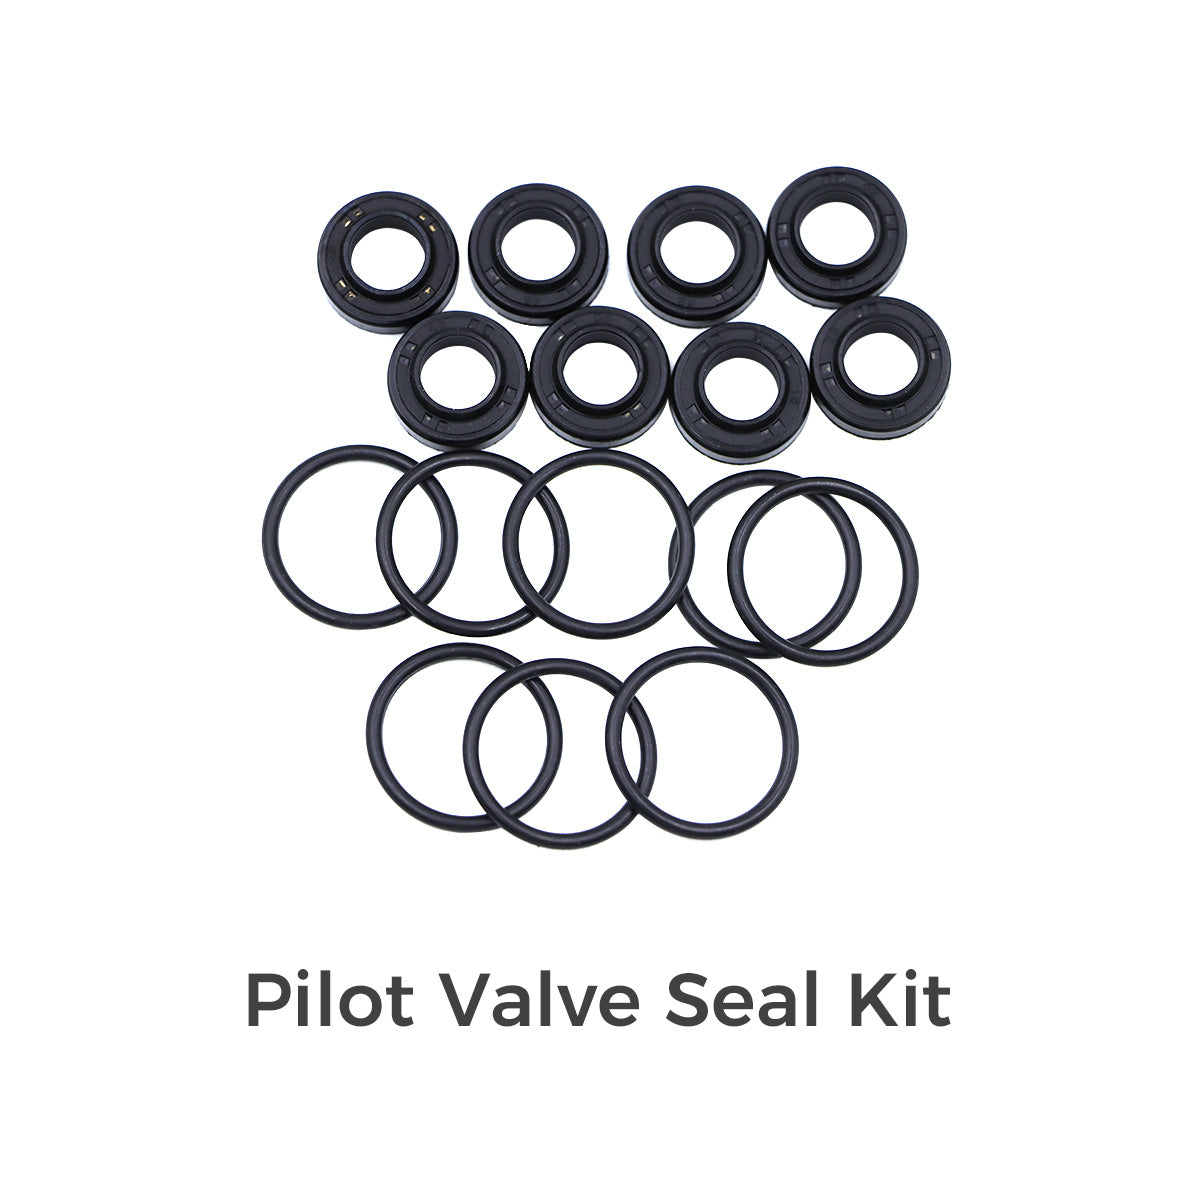 Seal Kits for Hitachi EX120-5 Excavator - Sinocmp